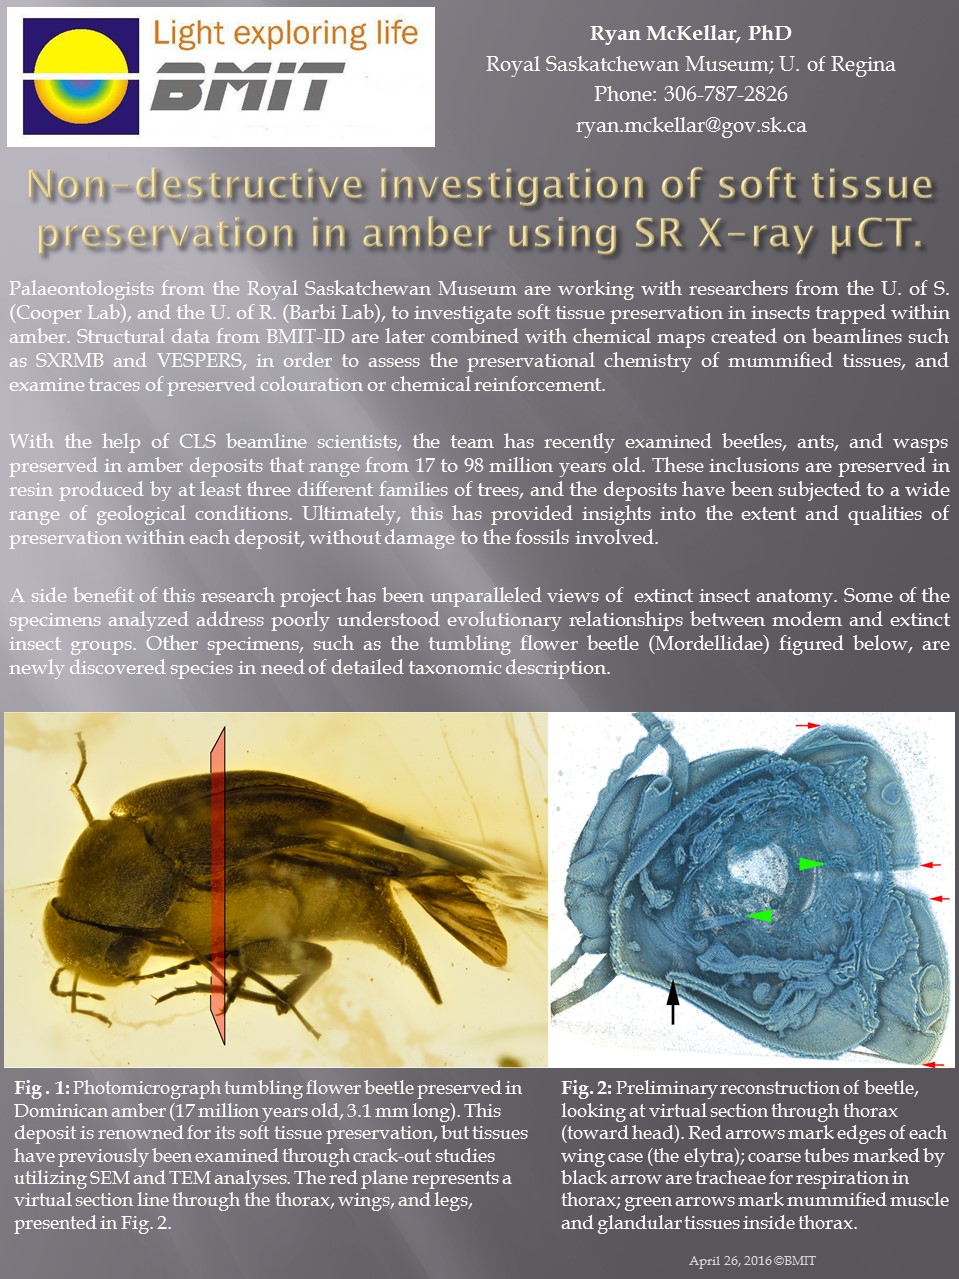 Non-destructive investigation of soft tissue preservation in amber Image